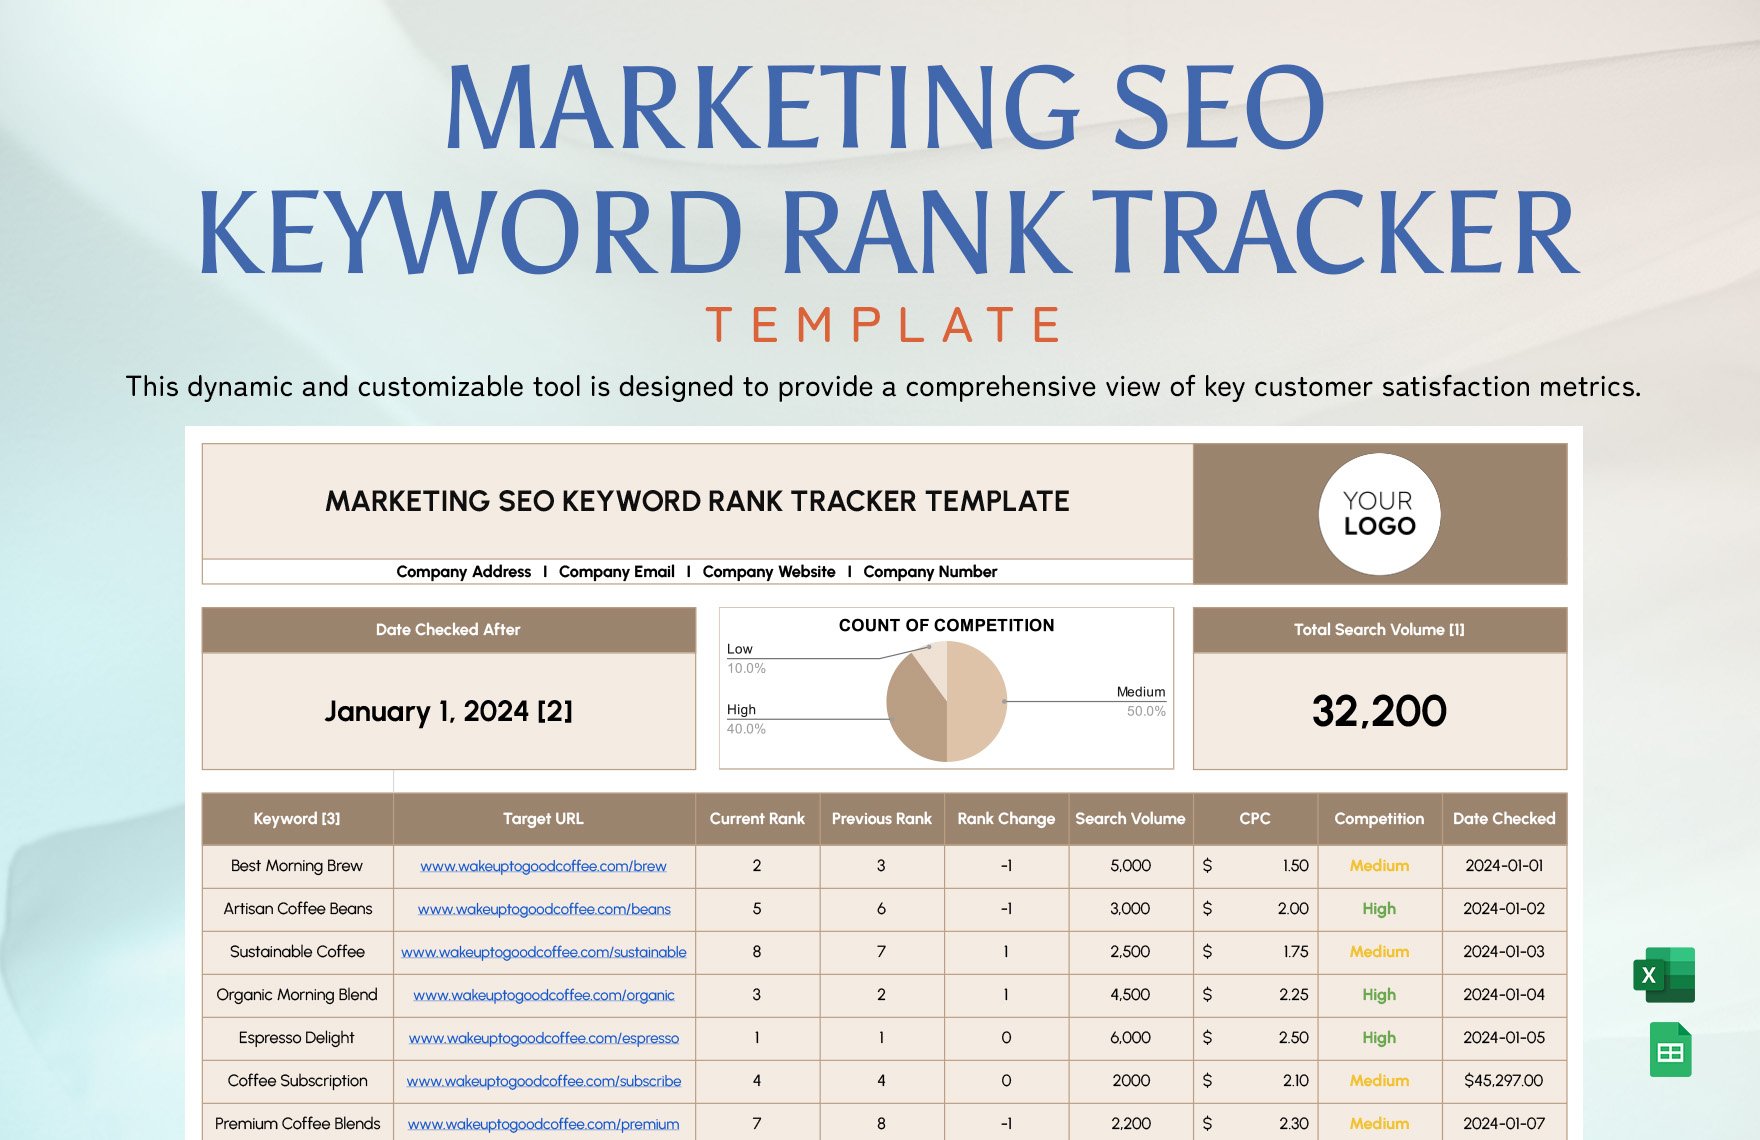 Marketing SEO Keyword Rank Tracker Template in Excel, Google Sheets